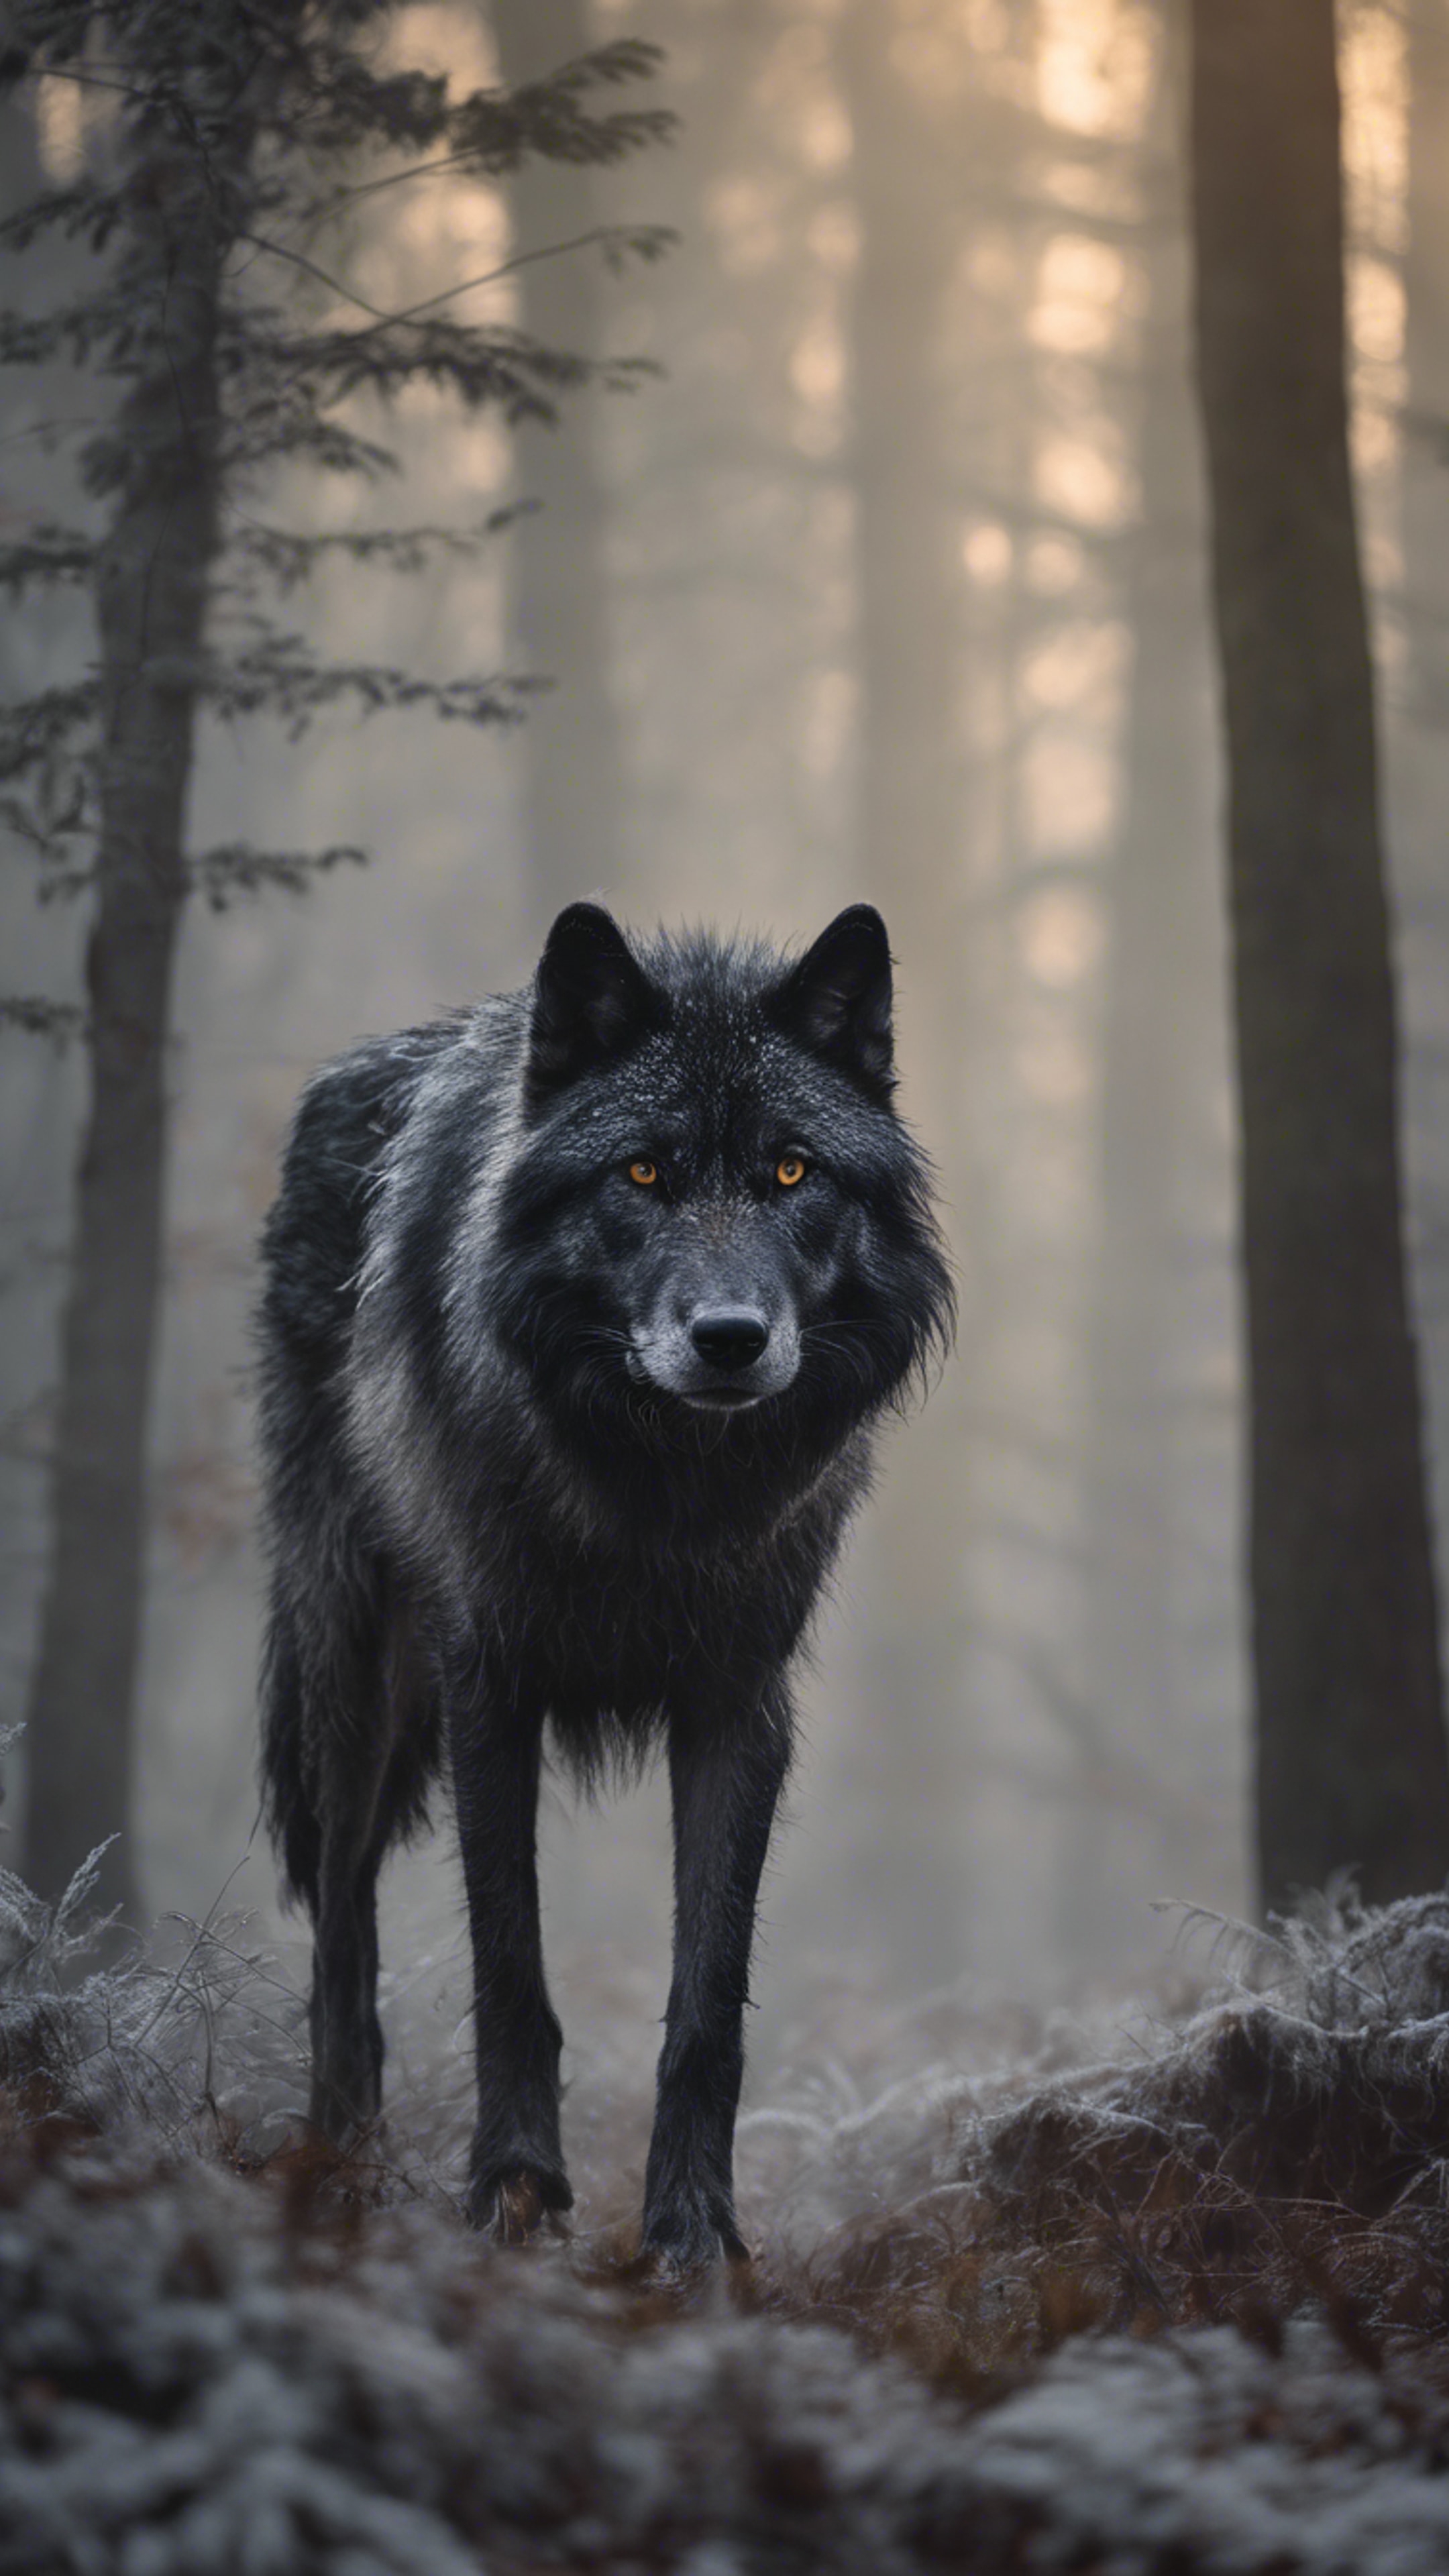 A cool black and gray shaggy wolf prowling through a mist-filled forest at dawn. Tapeta[e0adfa1209b347ac9a7e]